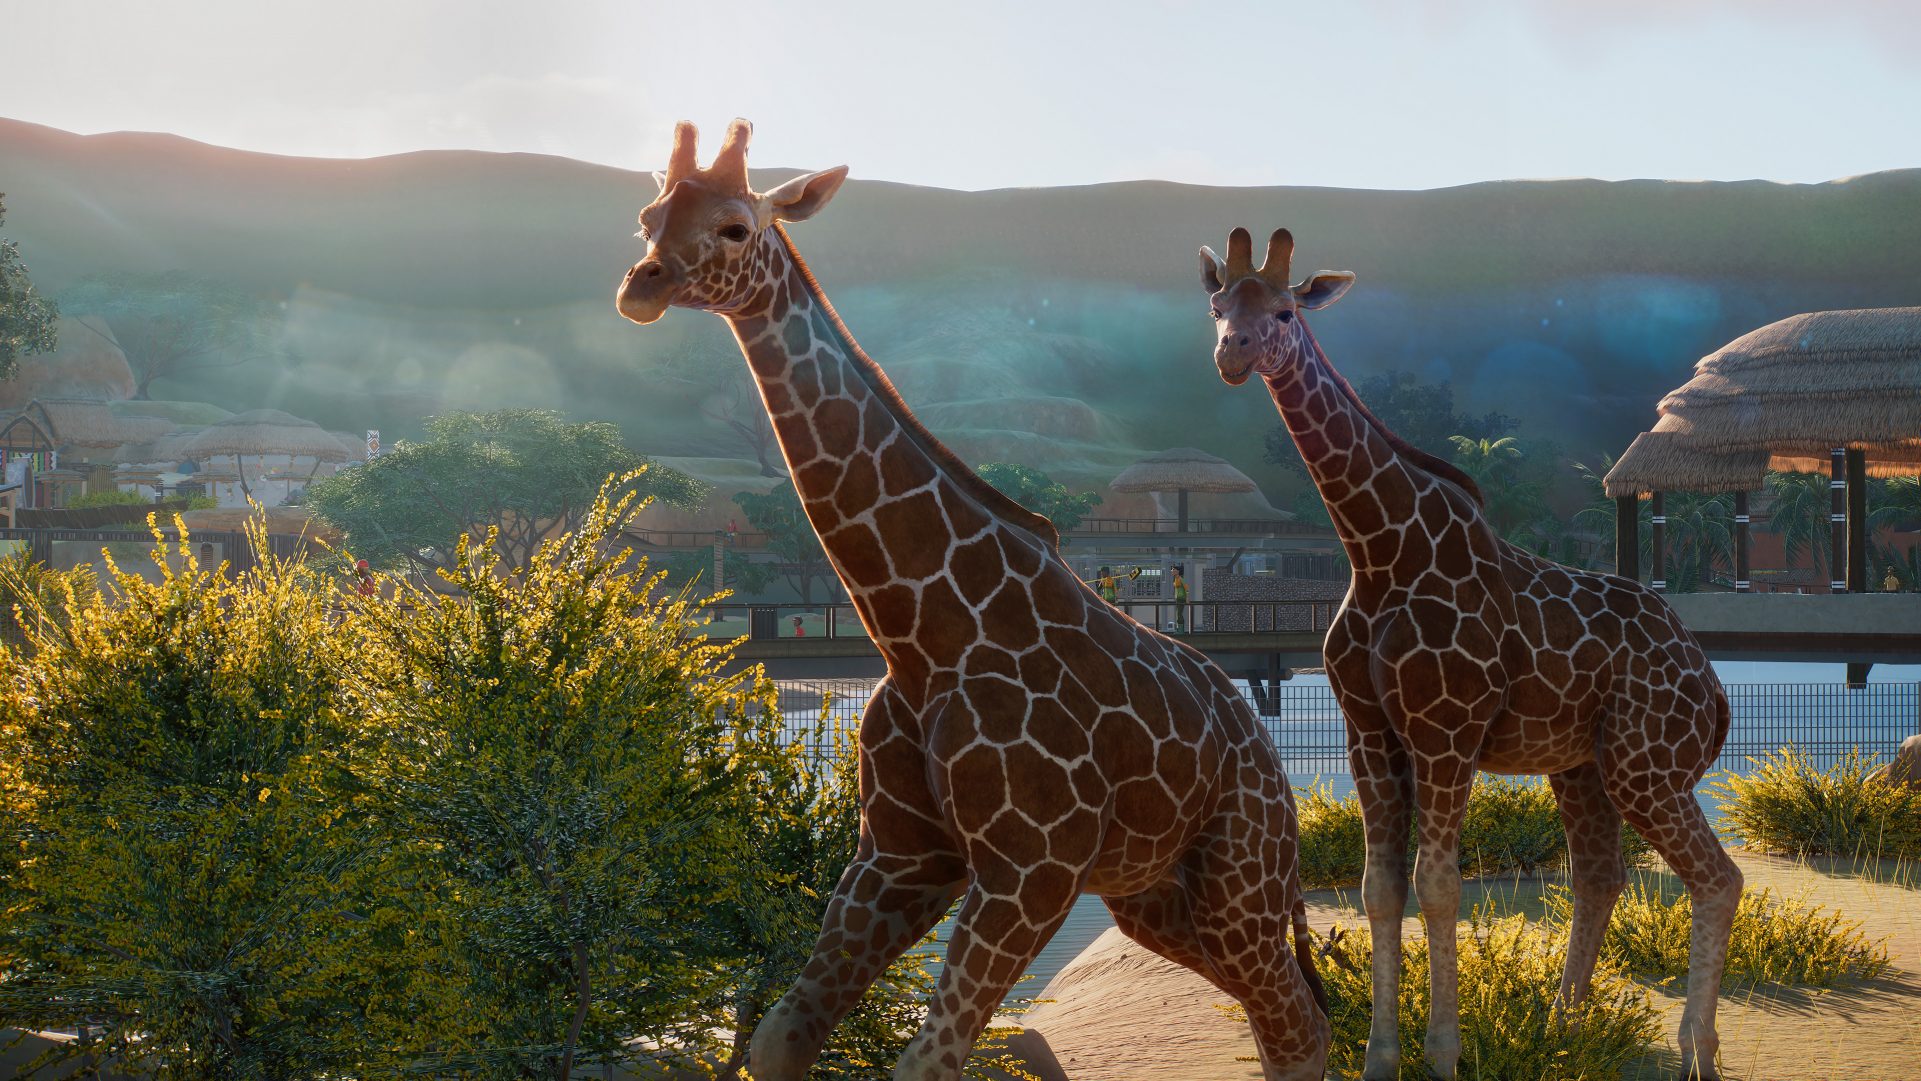 Planet Zoo girafes